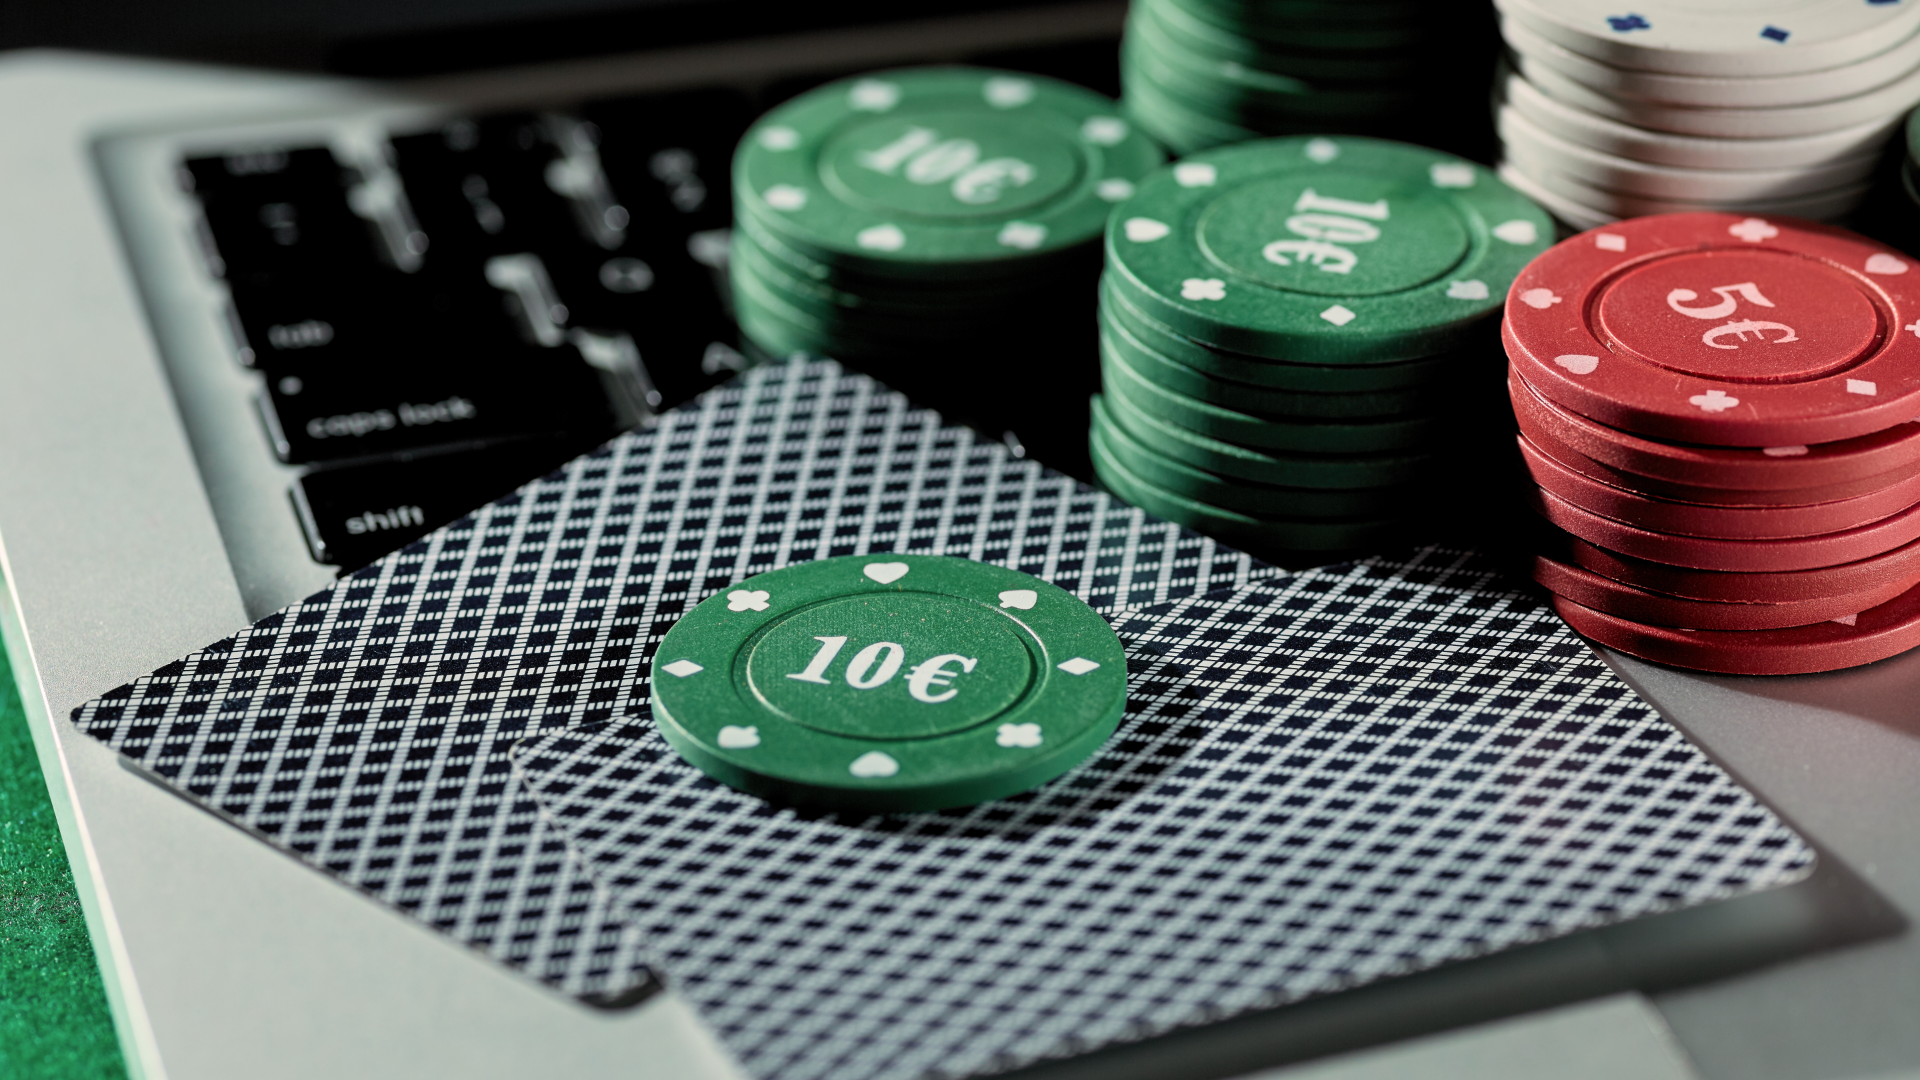 Online Casinos Offer Both Thrills And Risks